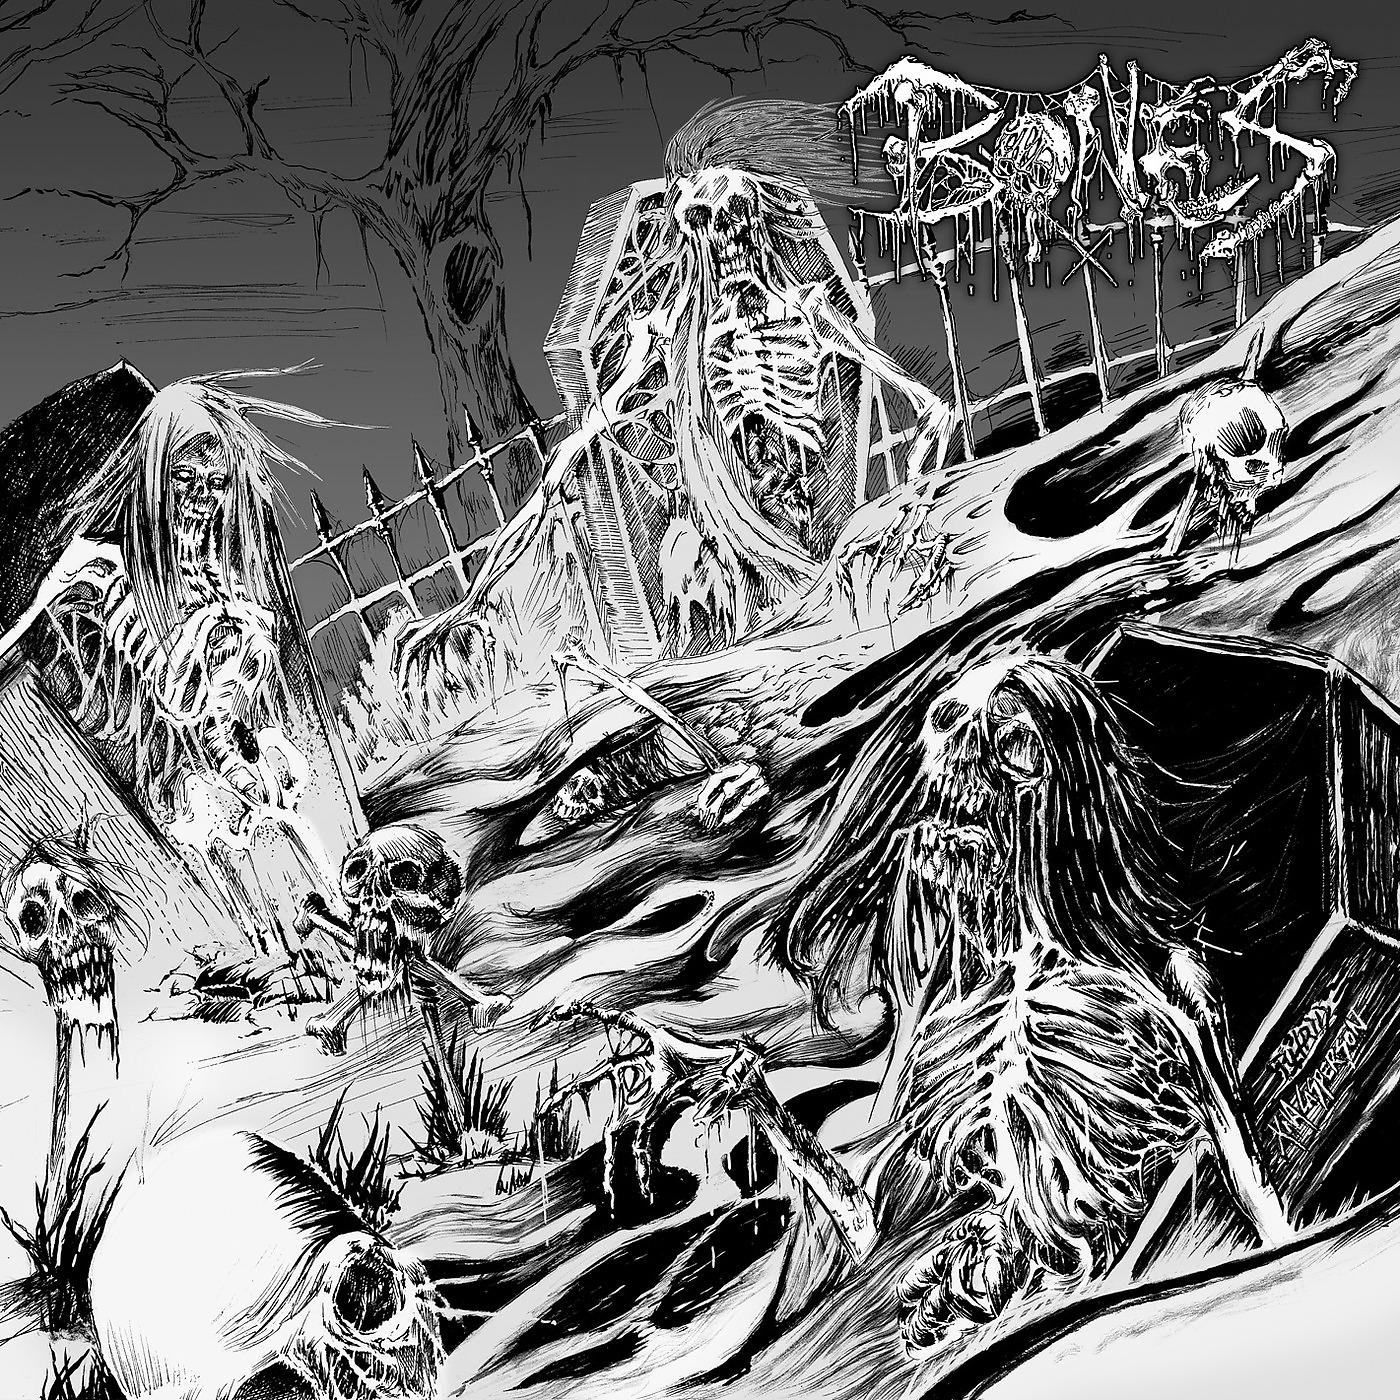 Bones ctrlaltdelete. Bones (рэпер). Bones обложки альбомов. Bones livingsucks. Bones (рэпер) альбомы.